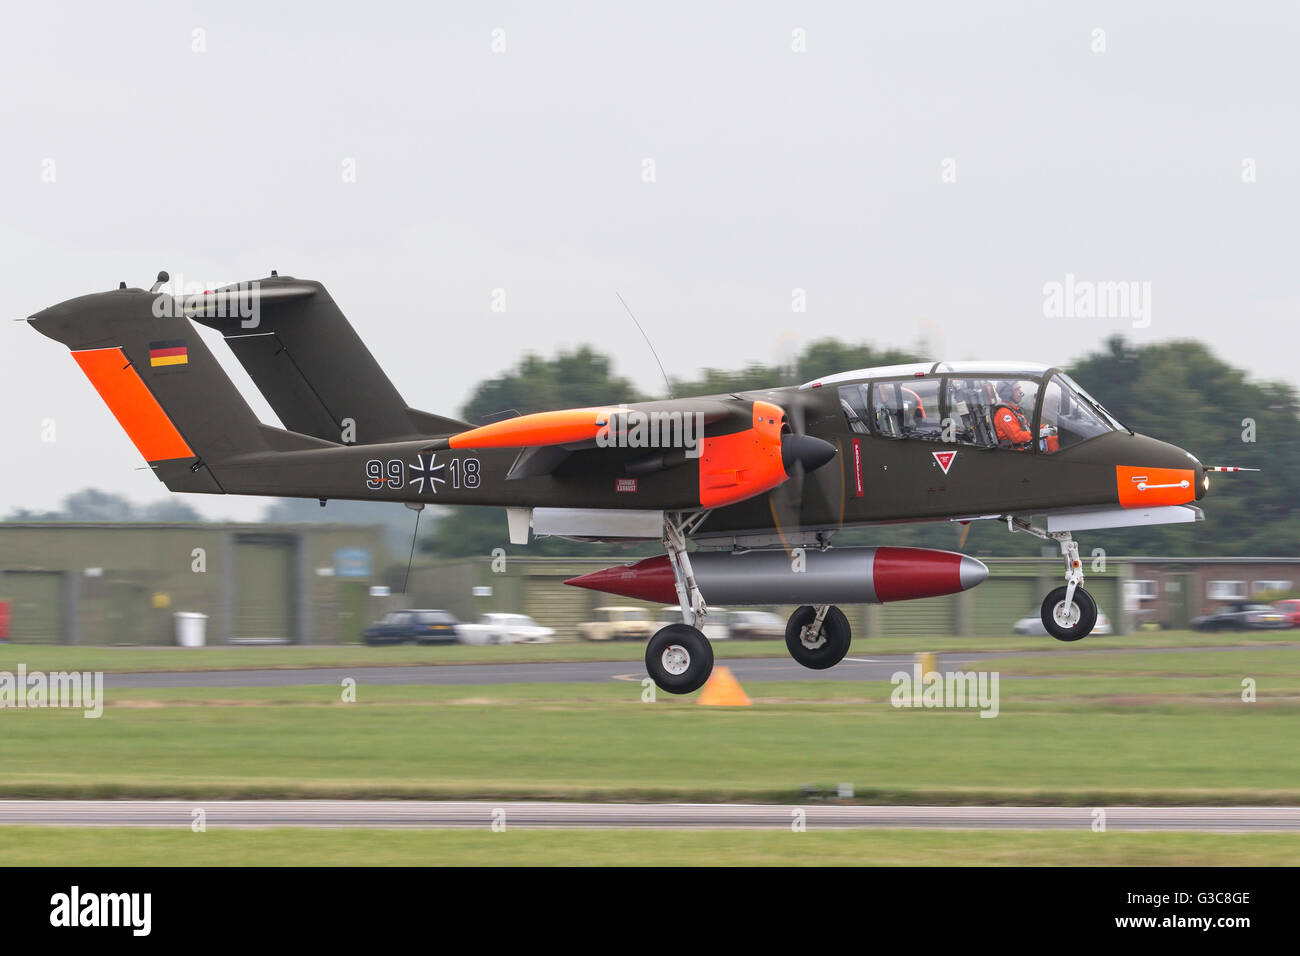 North American Aviation - Rockwell OV-10B Bronco G-ONAA aircraft in German military markings Stock Photo